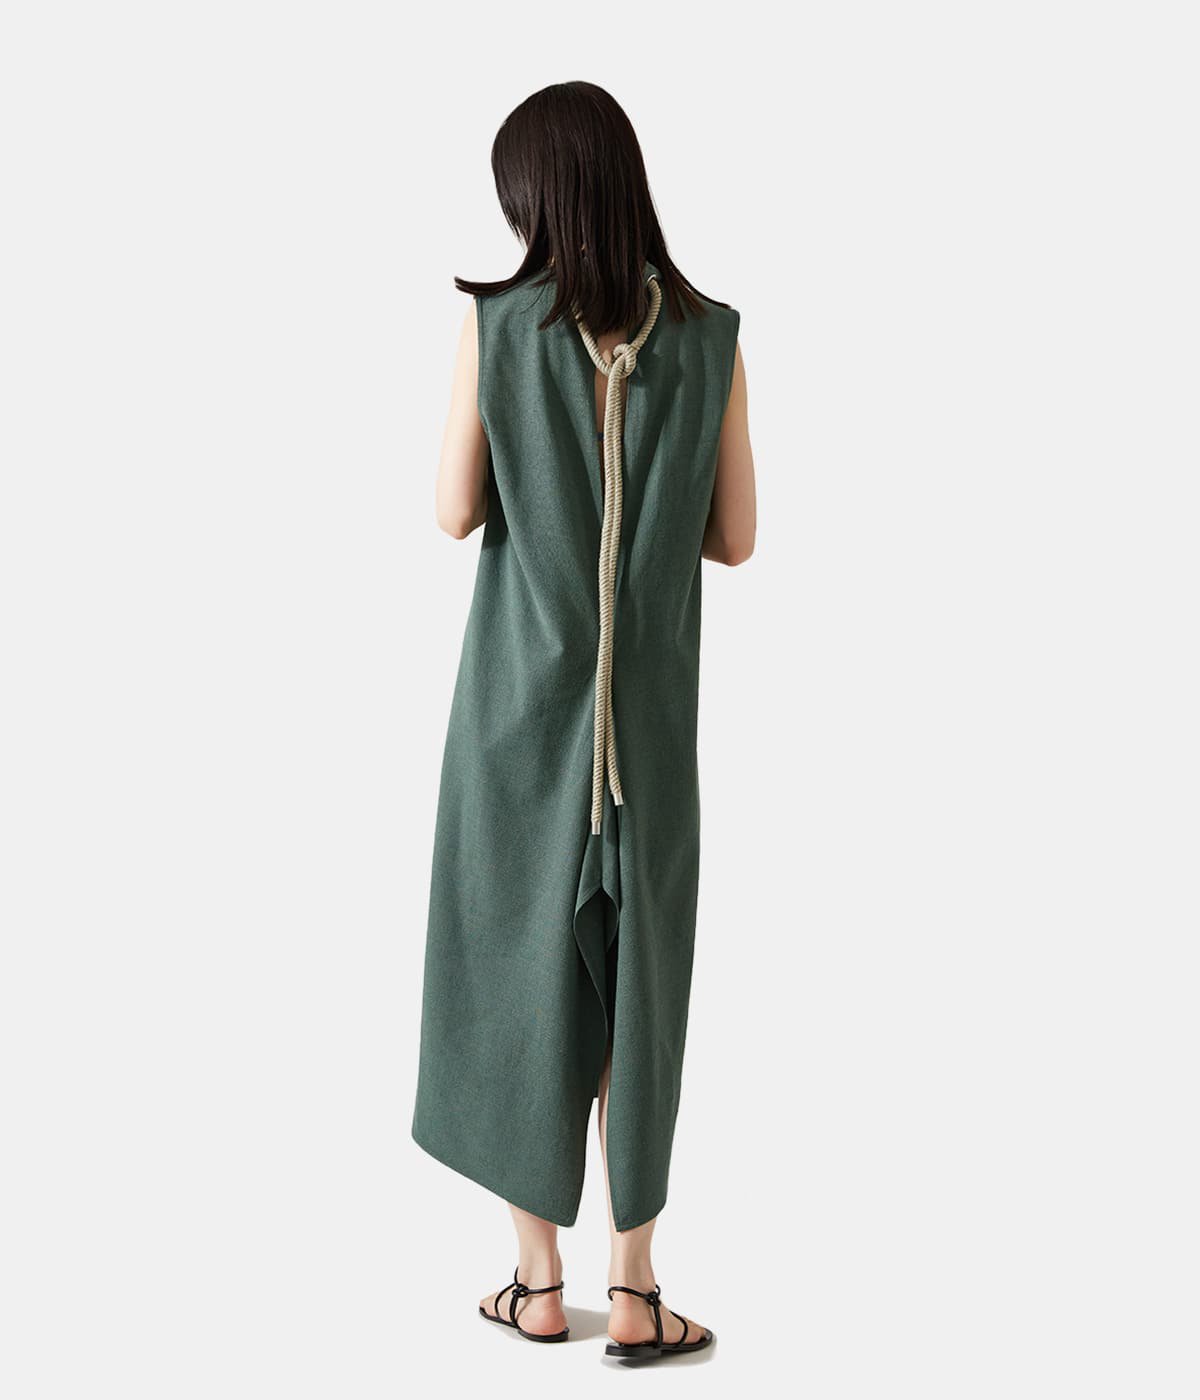 Zeta Sheer Embellished Long Sleeve A-Line Mini Dress in Almond